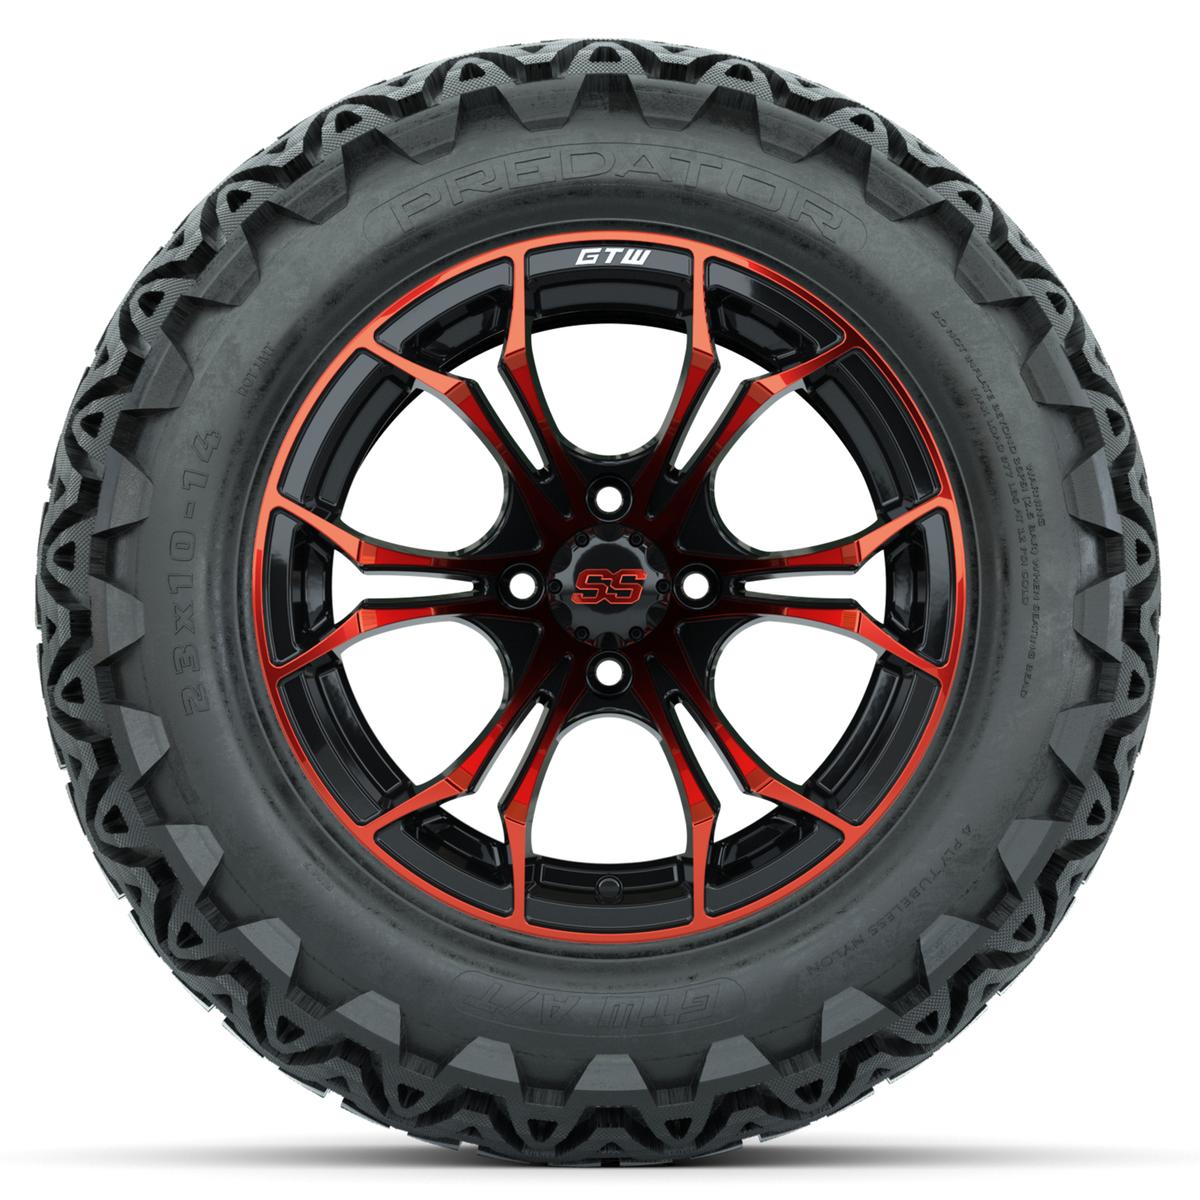 GTW Spyder Red/Black 14 in Wheels with 23x10-14 GTW Predator All-Terrain Tires – Full Set